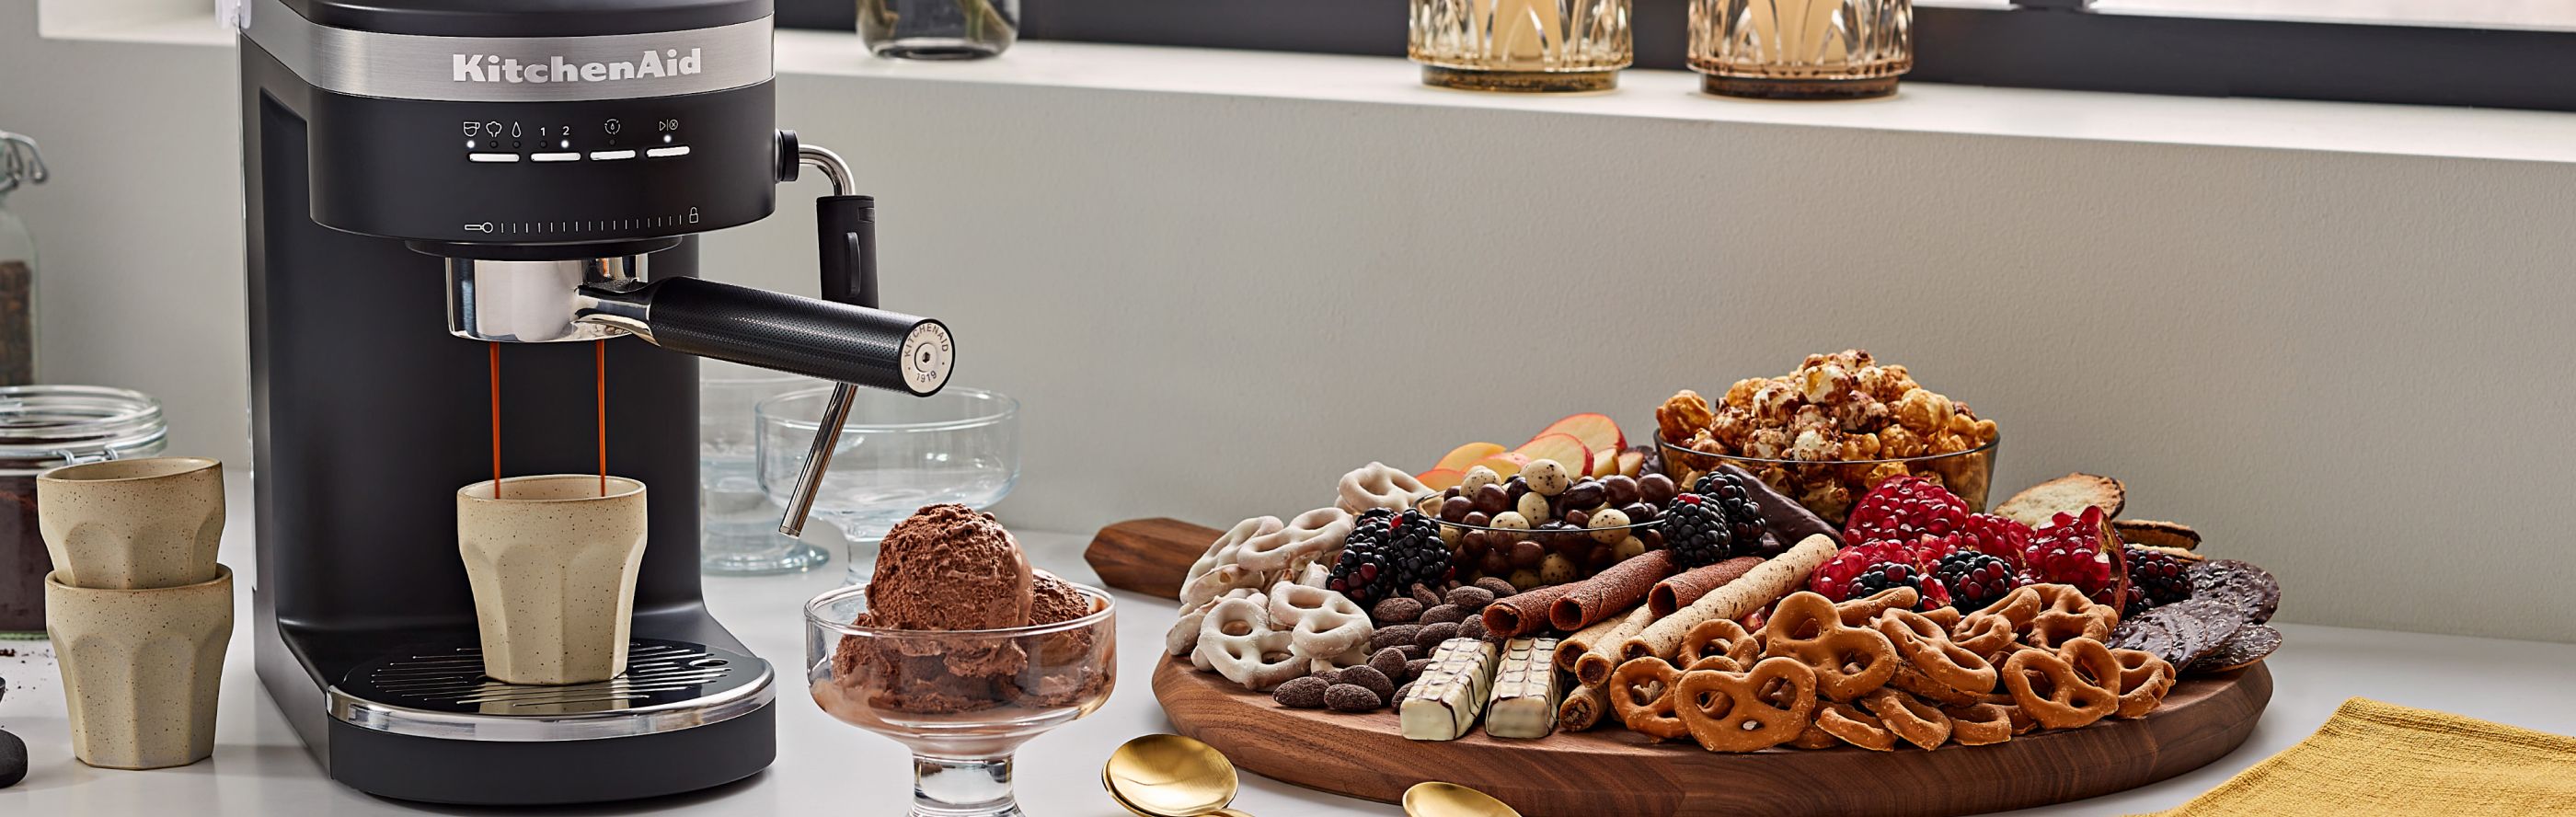 KitchenAid® espresso machine with dessert charcuterie board